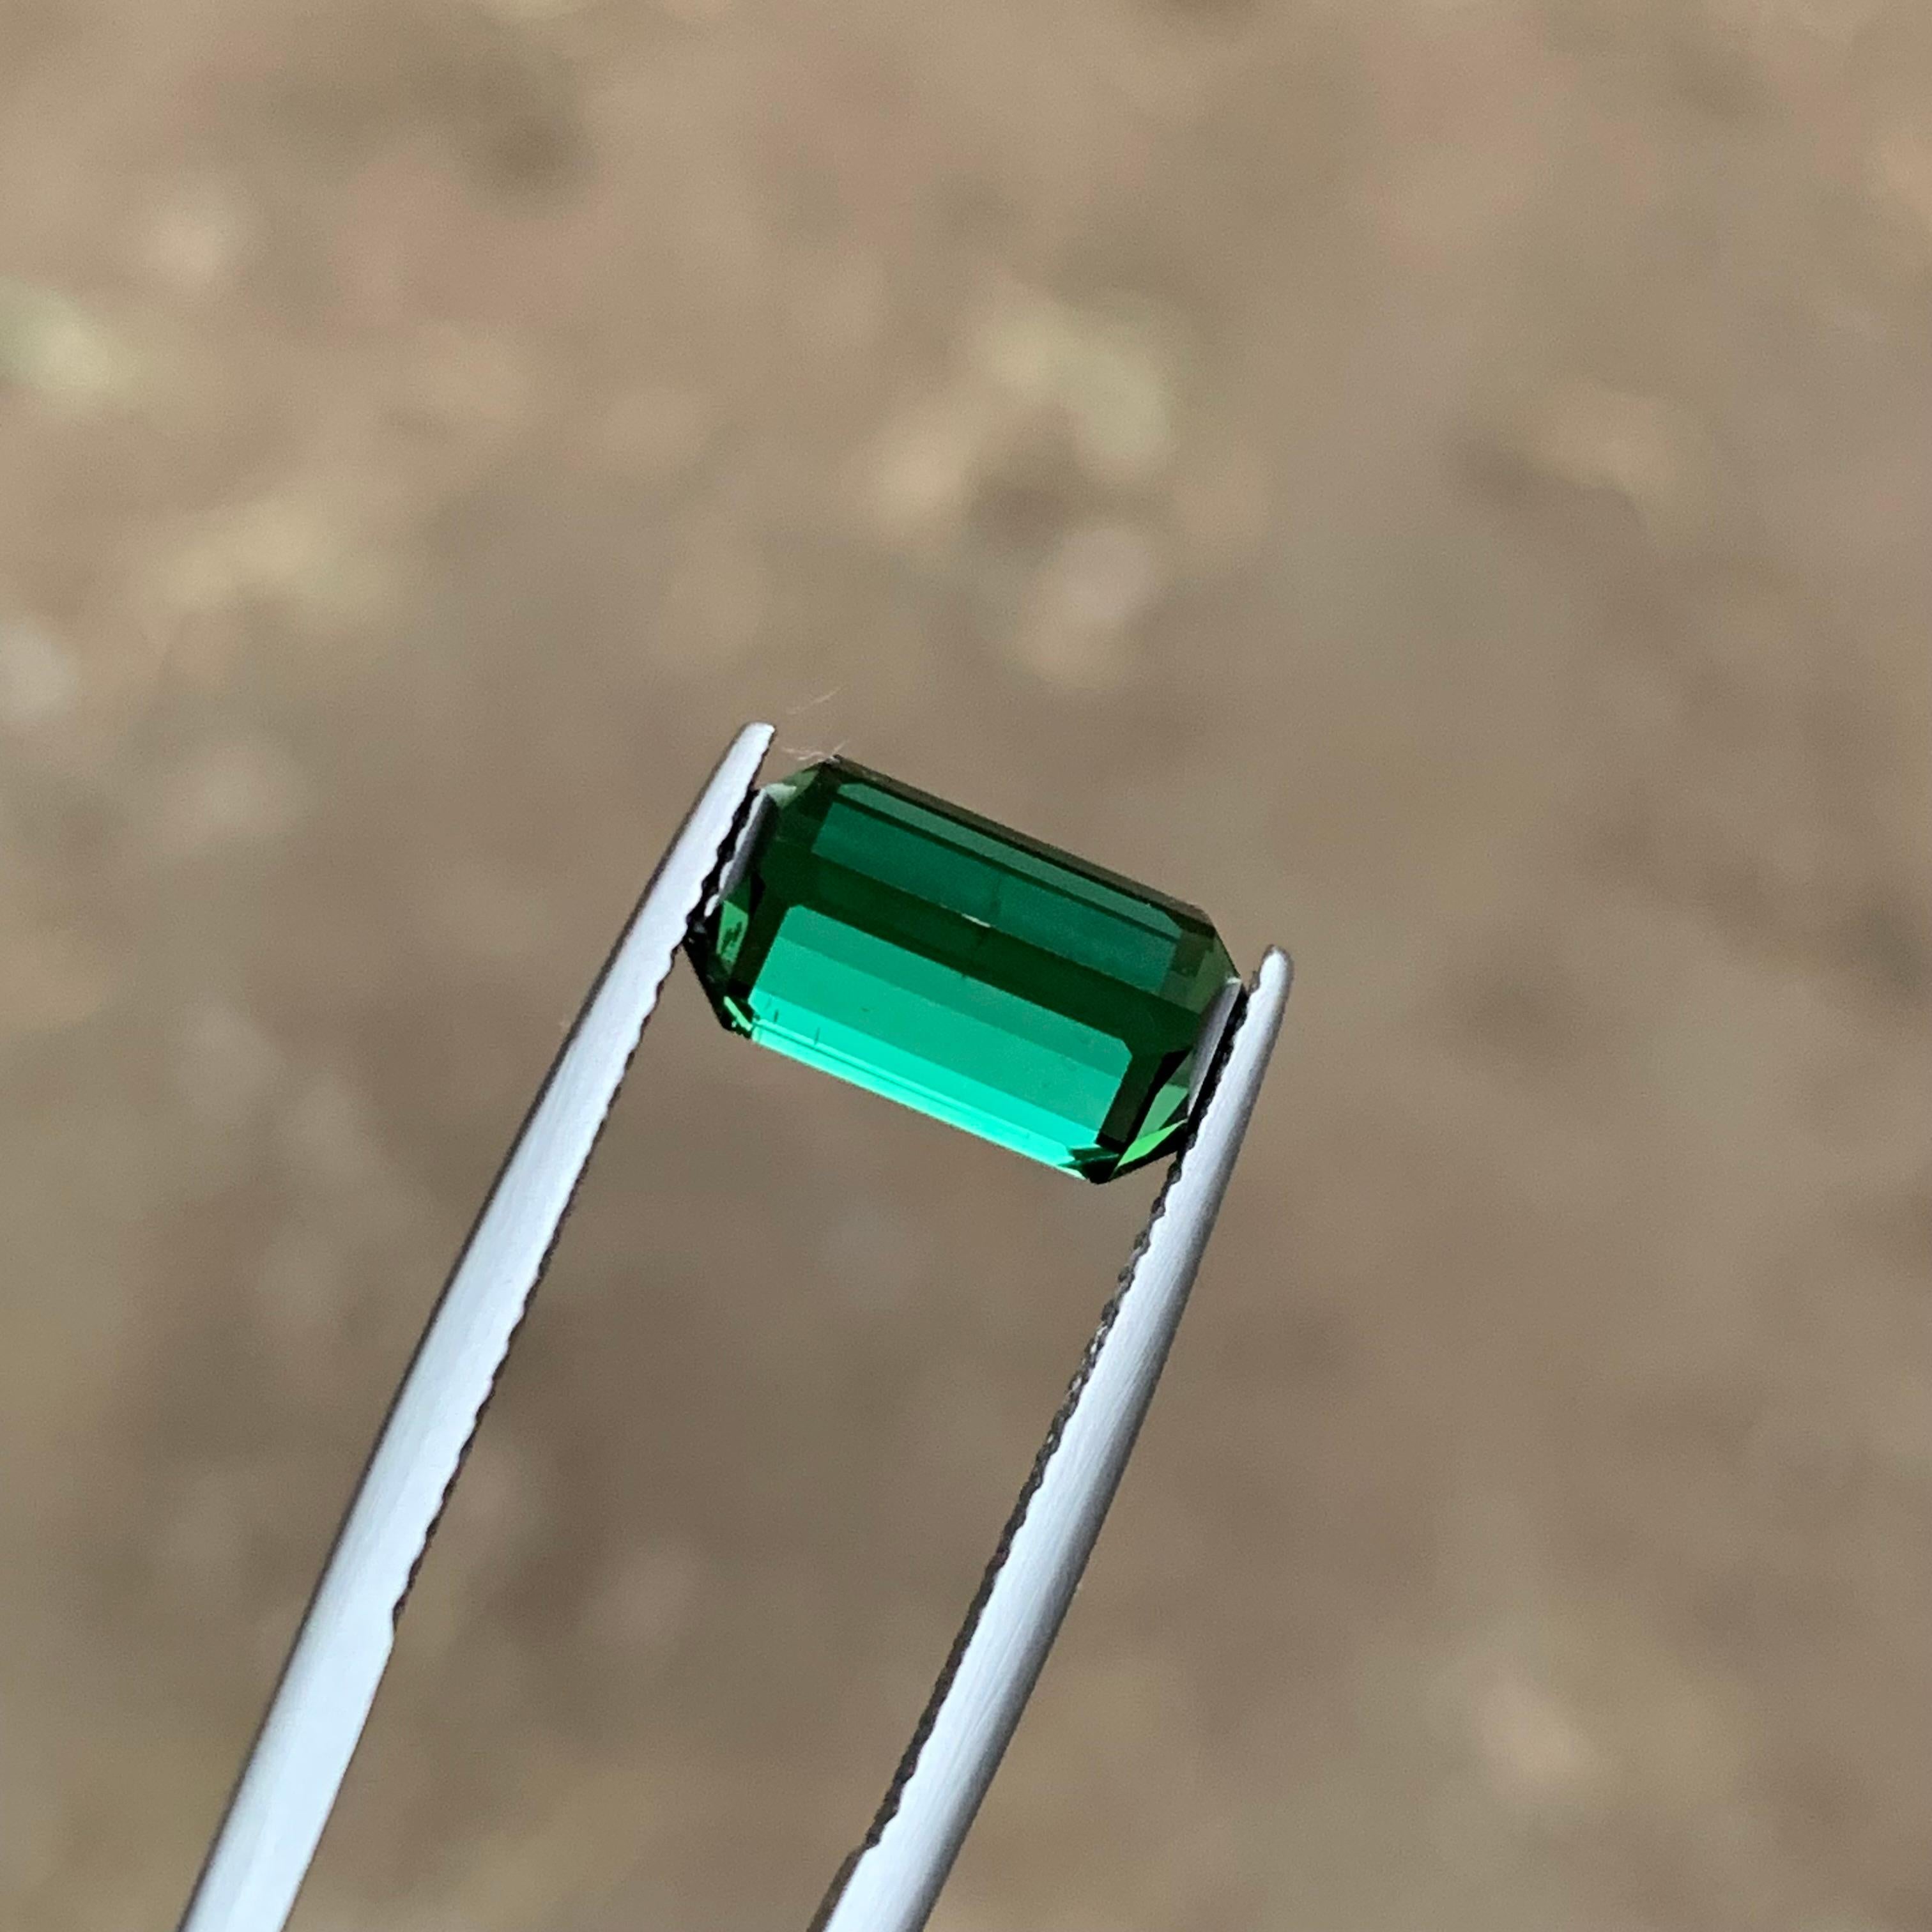 Rare Green Natural Tourmaline Gemstone, 3.85 Carat Emerald Cut for Ring/Pendant 4